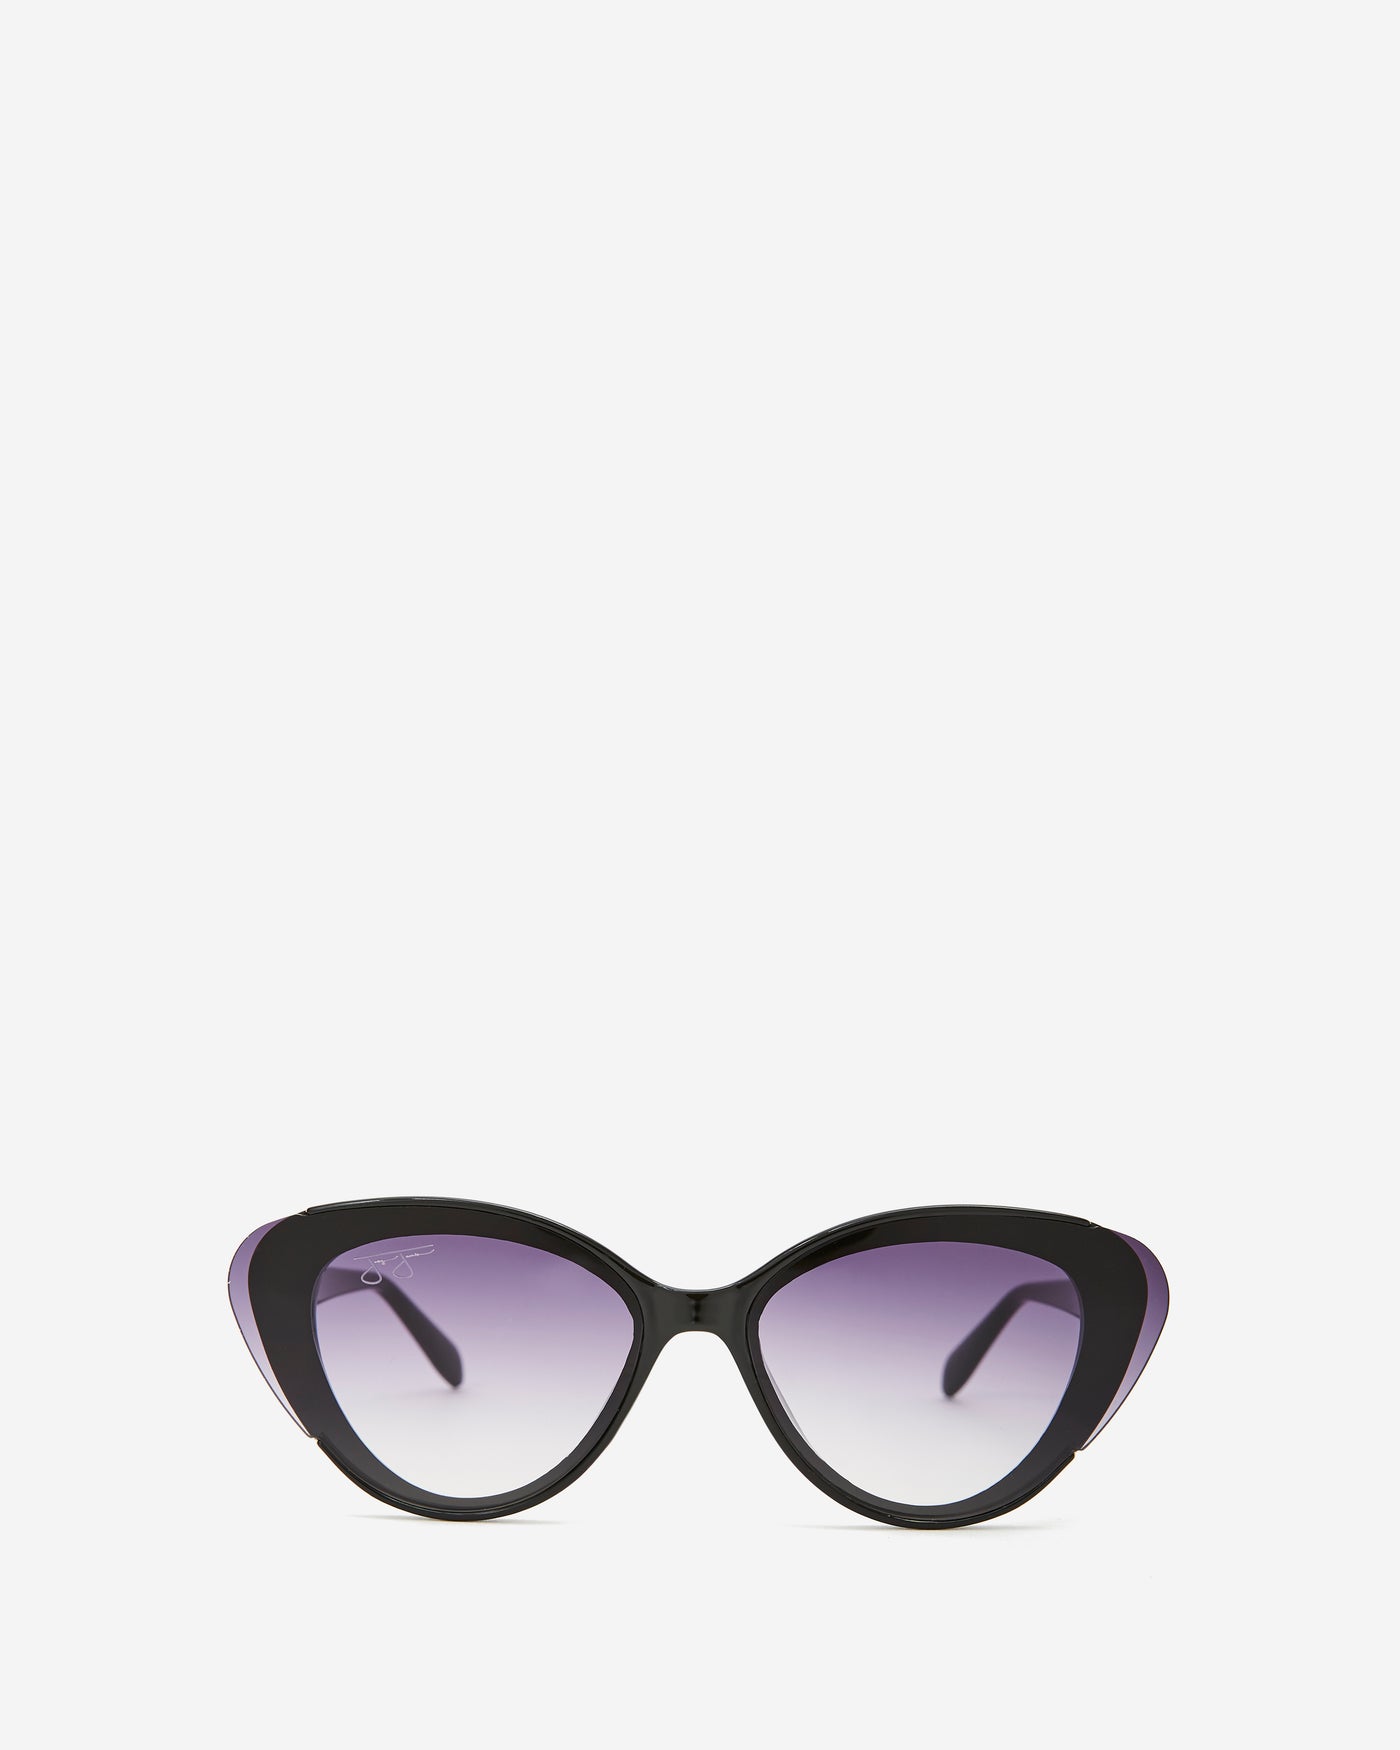 Oversized Cat Eye Sunglasses - Black Frame with Smoke Lens Sunglasses Joey James, The Label   